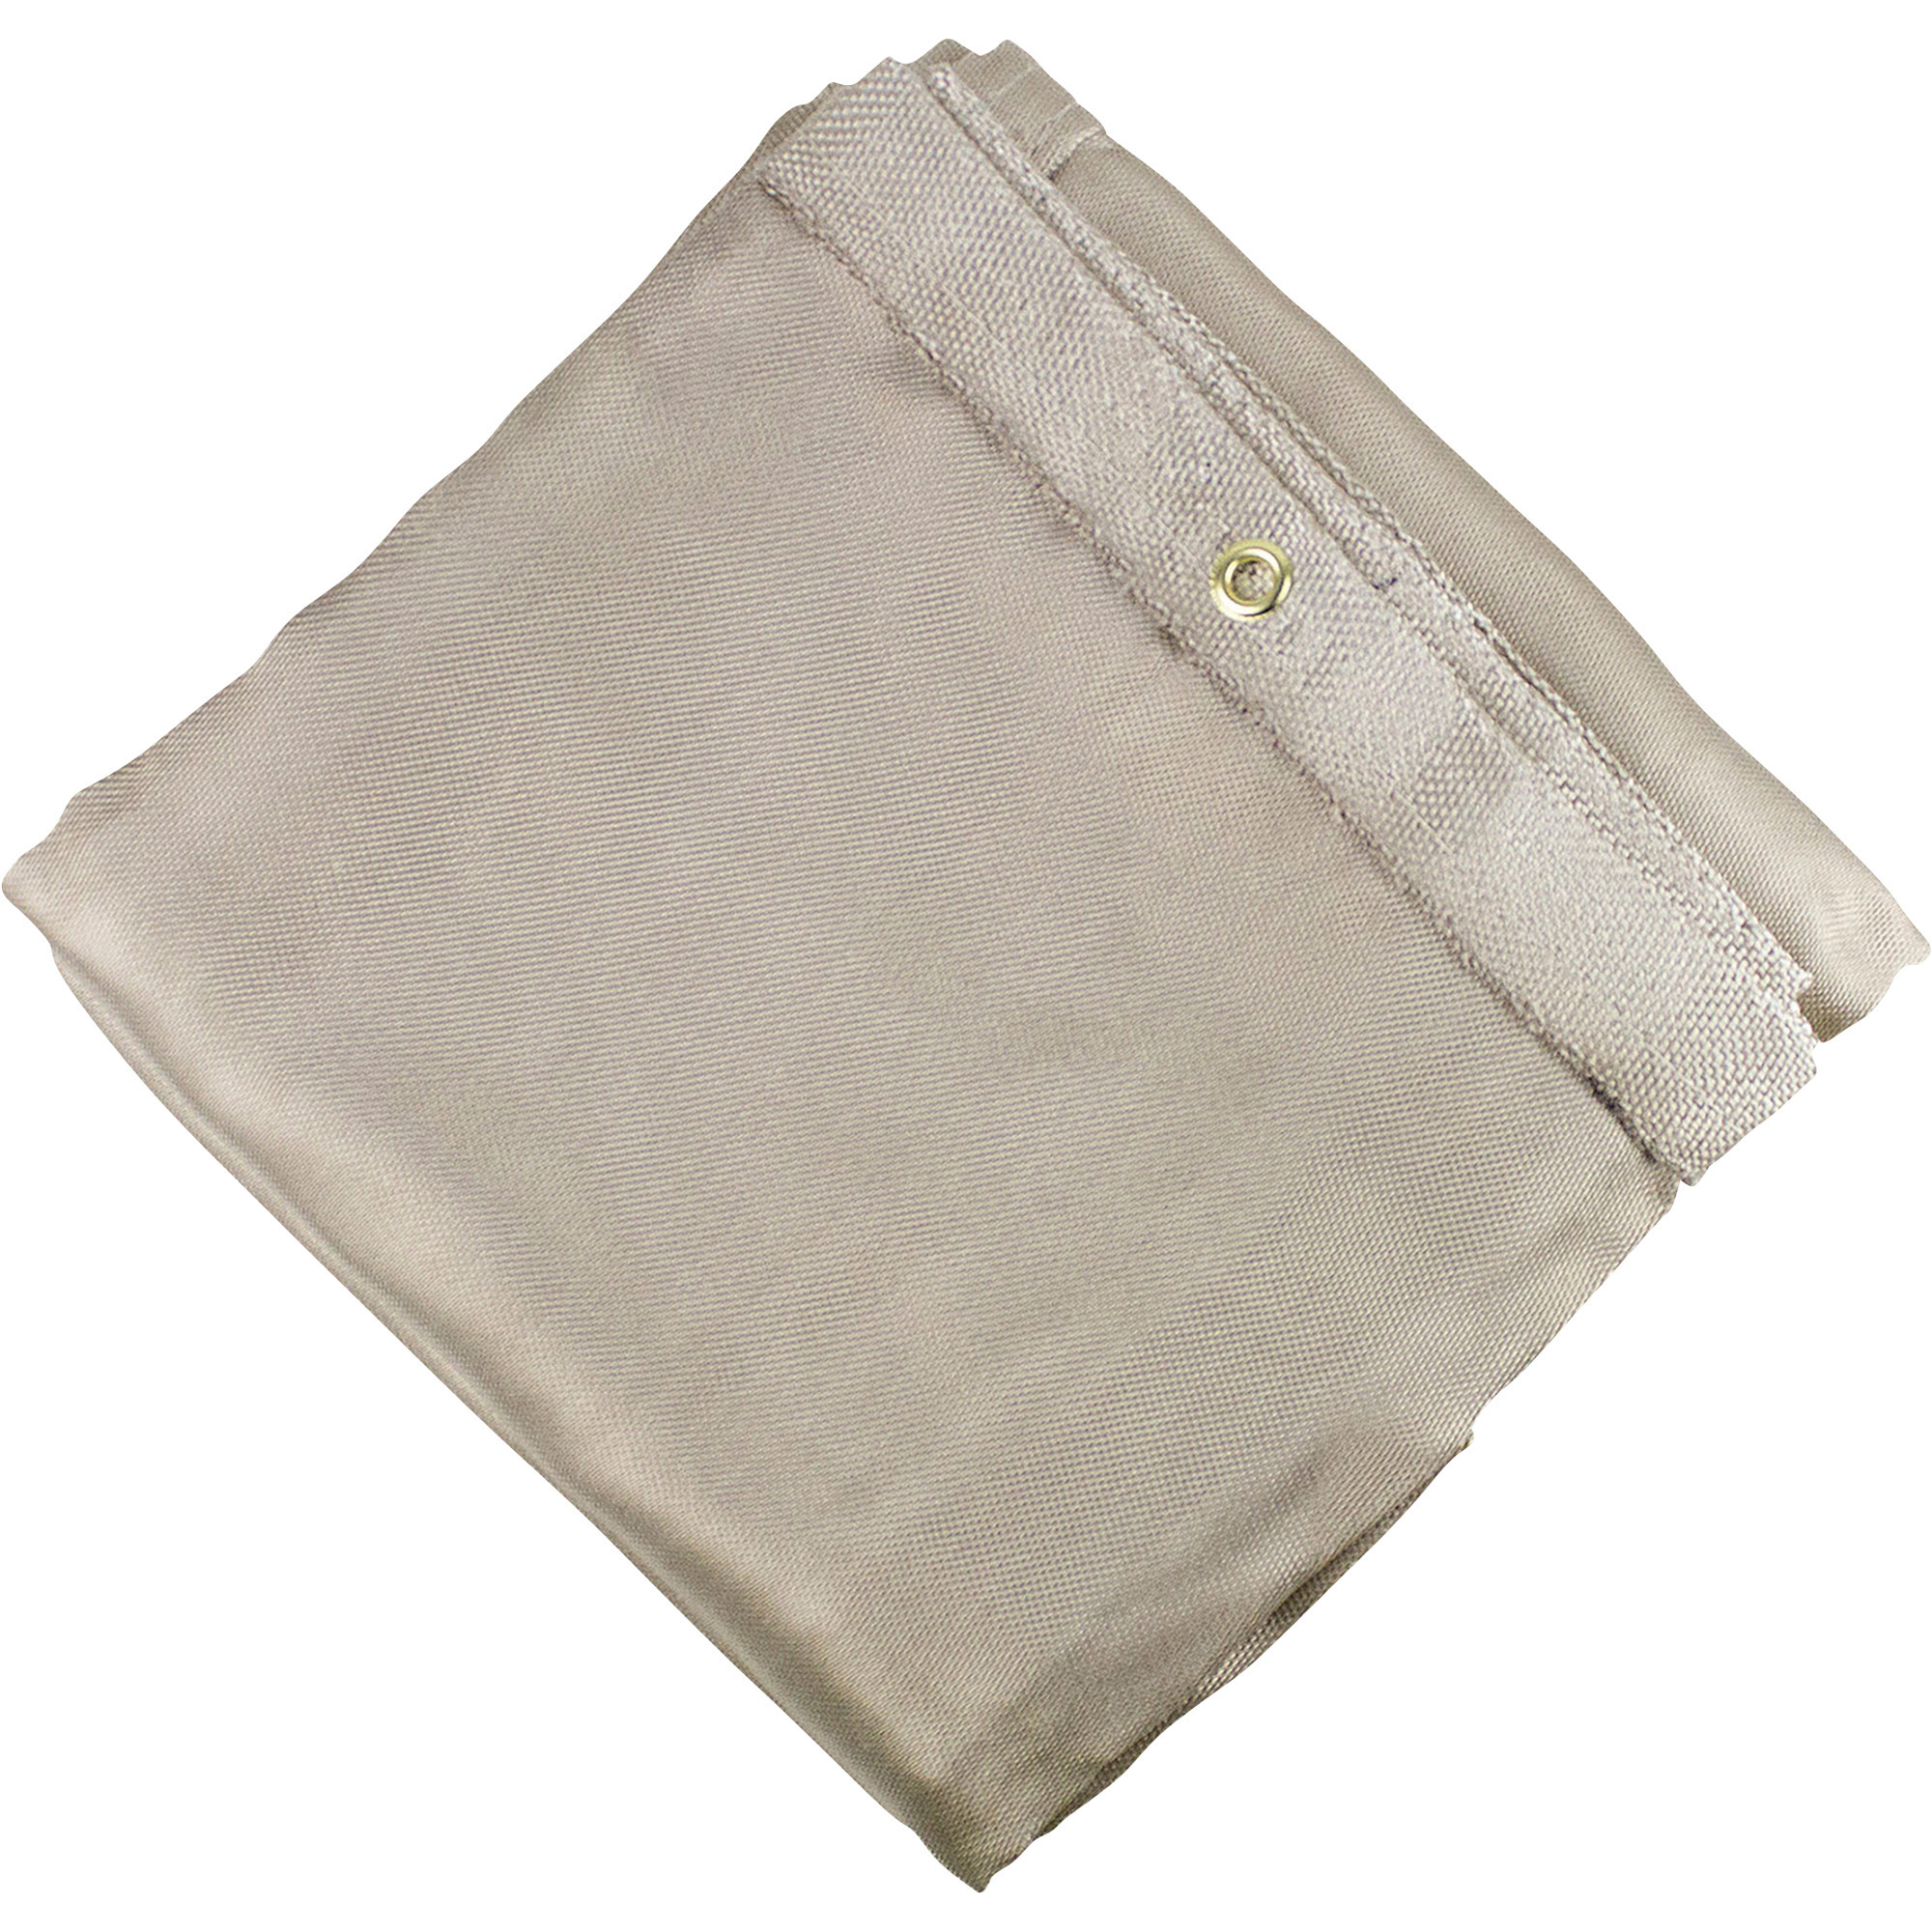 Jackson Safety Silica Cloth Fiberglass Welding Blanket Roll, Tan, 3ft. x 150ft., Model 36165